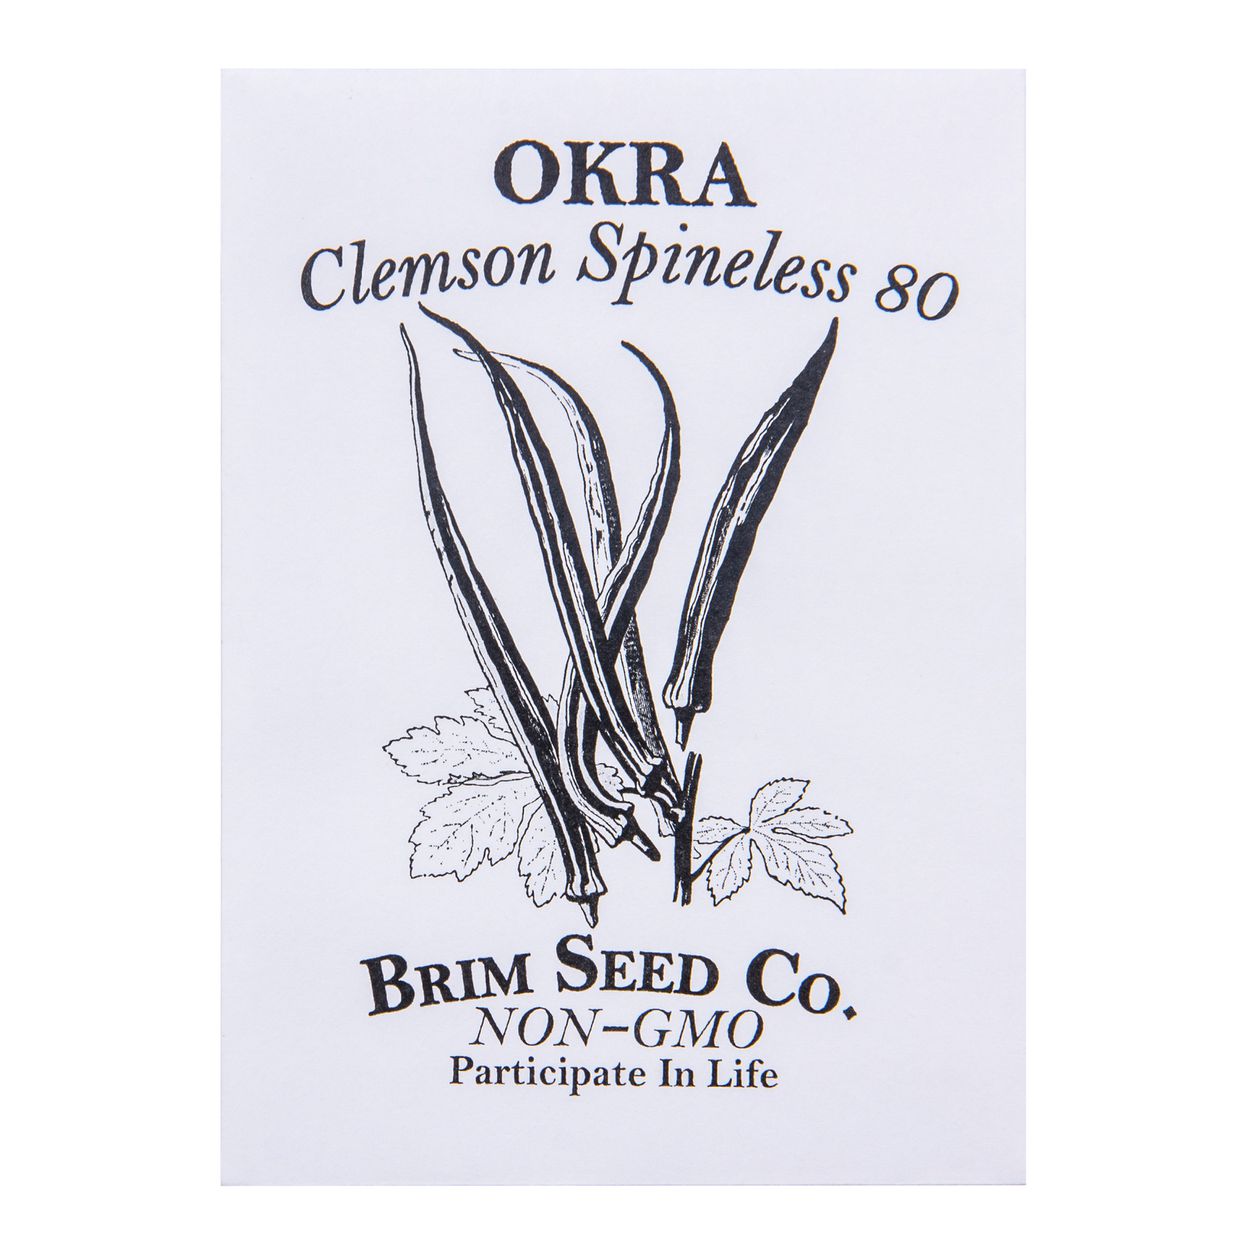 Brim Seed Co. - Clemson Spineless 80 Okra Seed